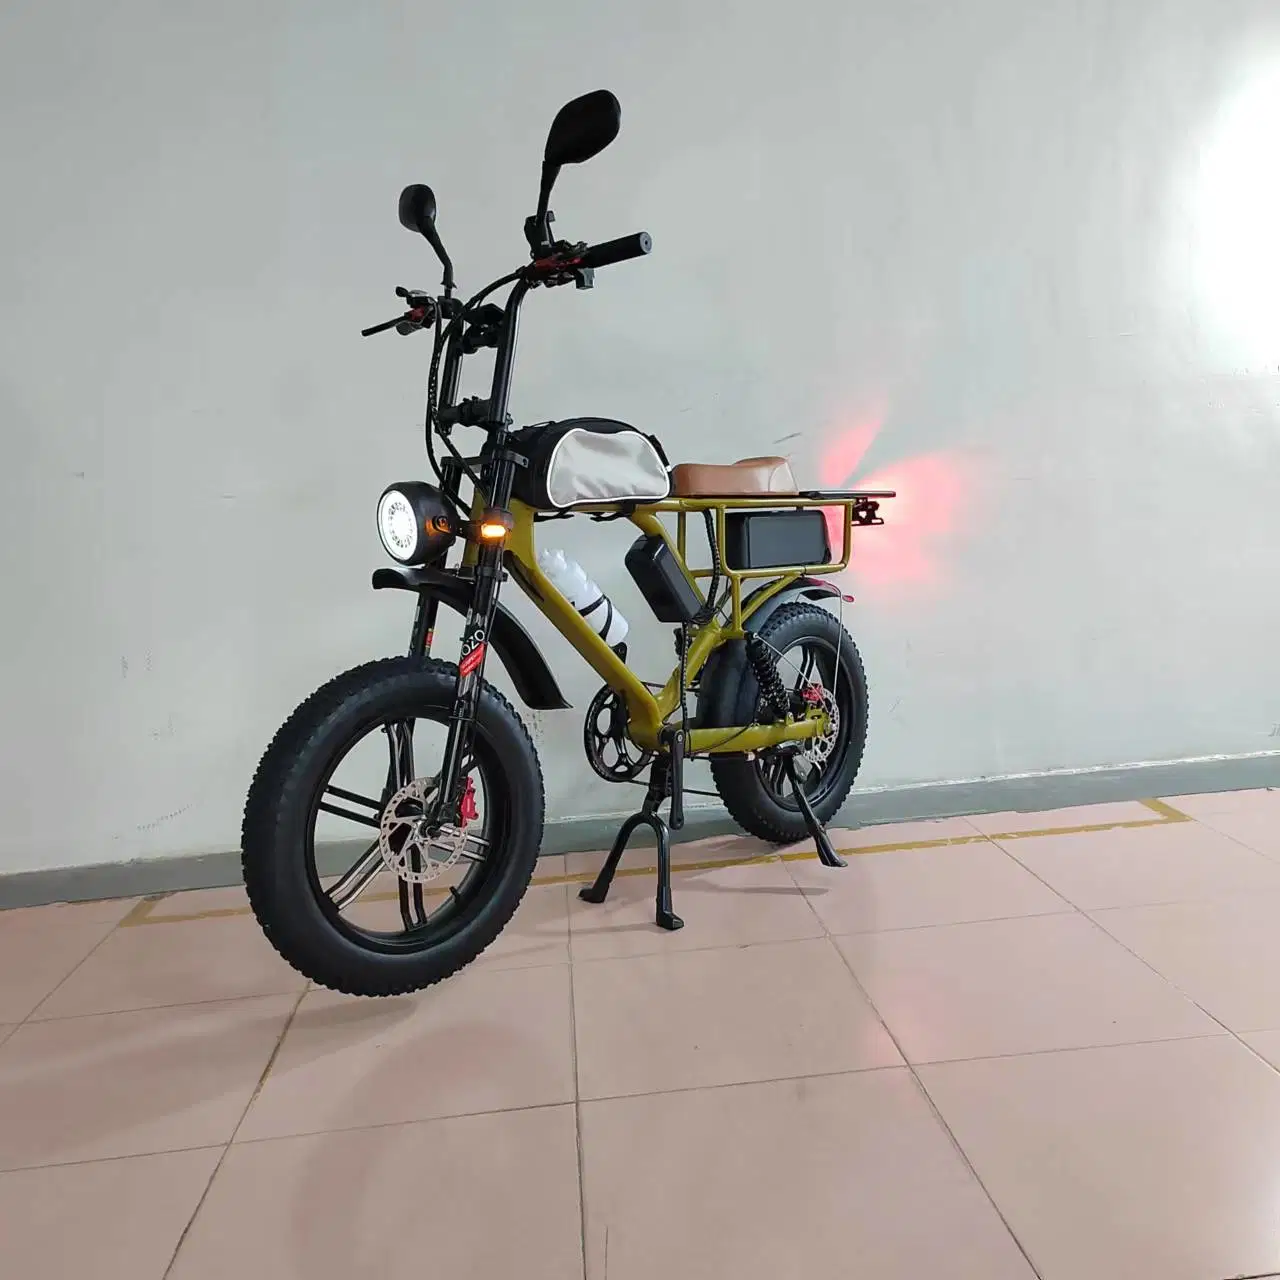 750W Bafang Motor 52V 22ah Samsung Battery Electric City Bike